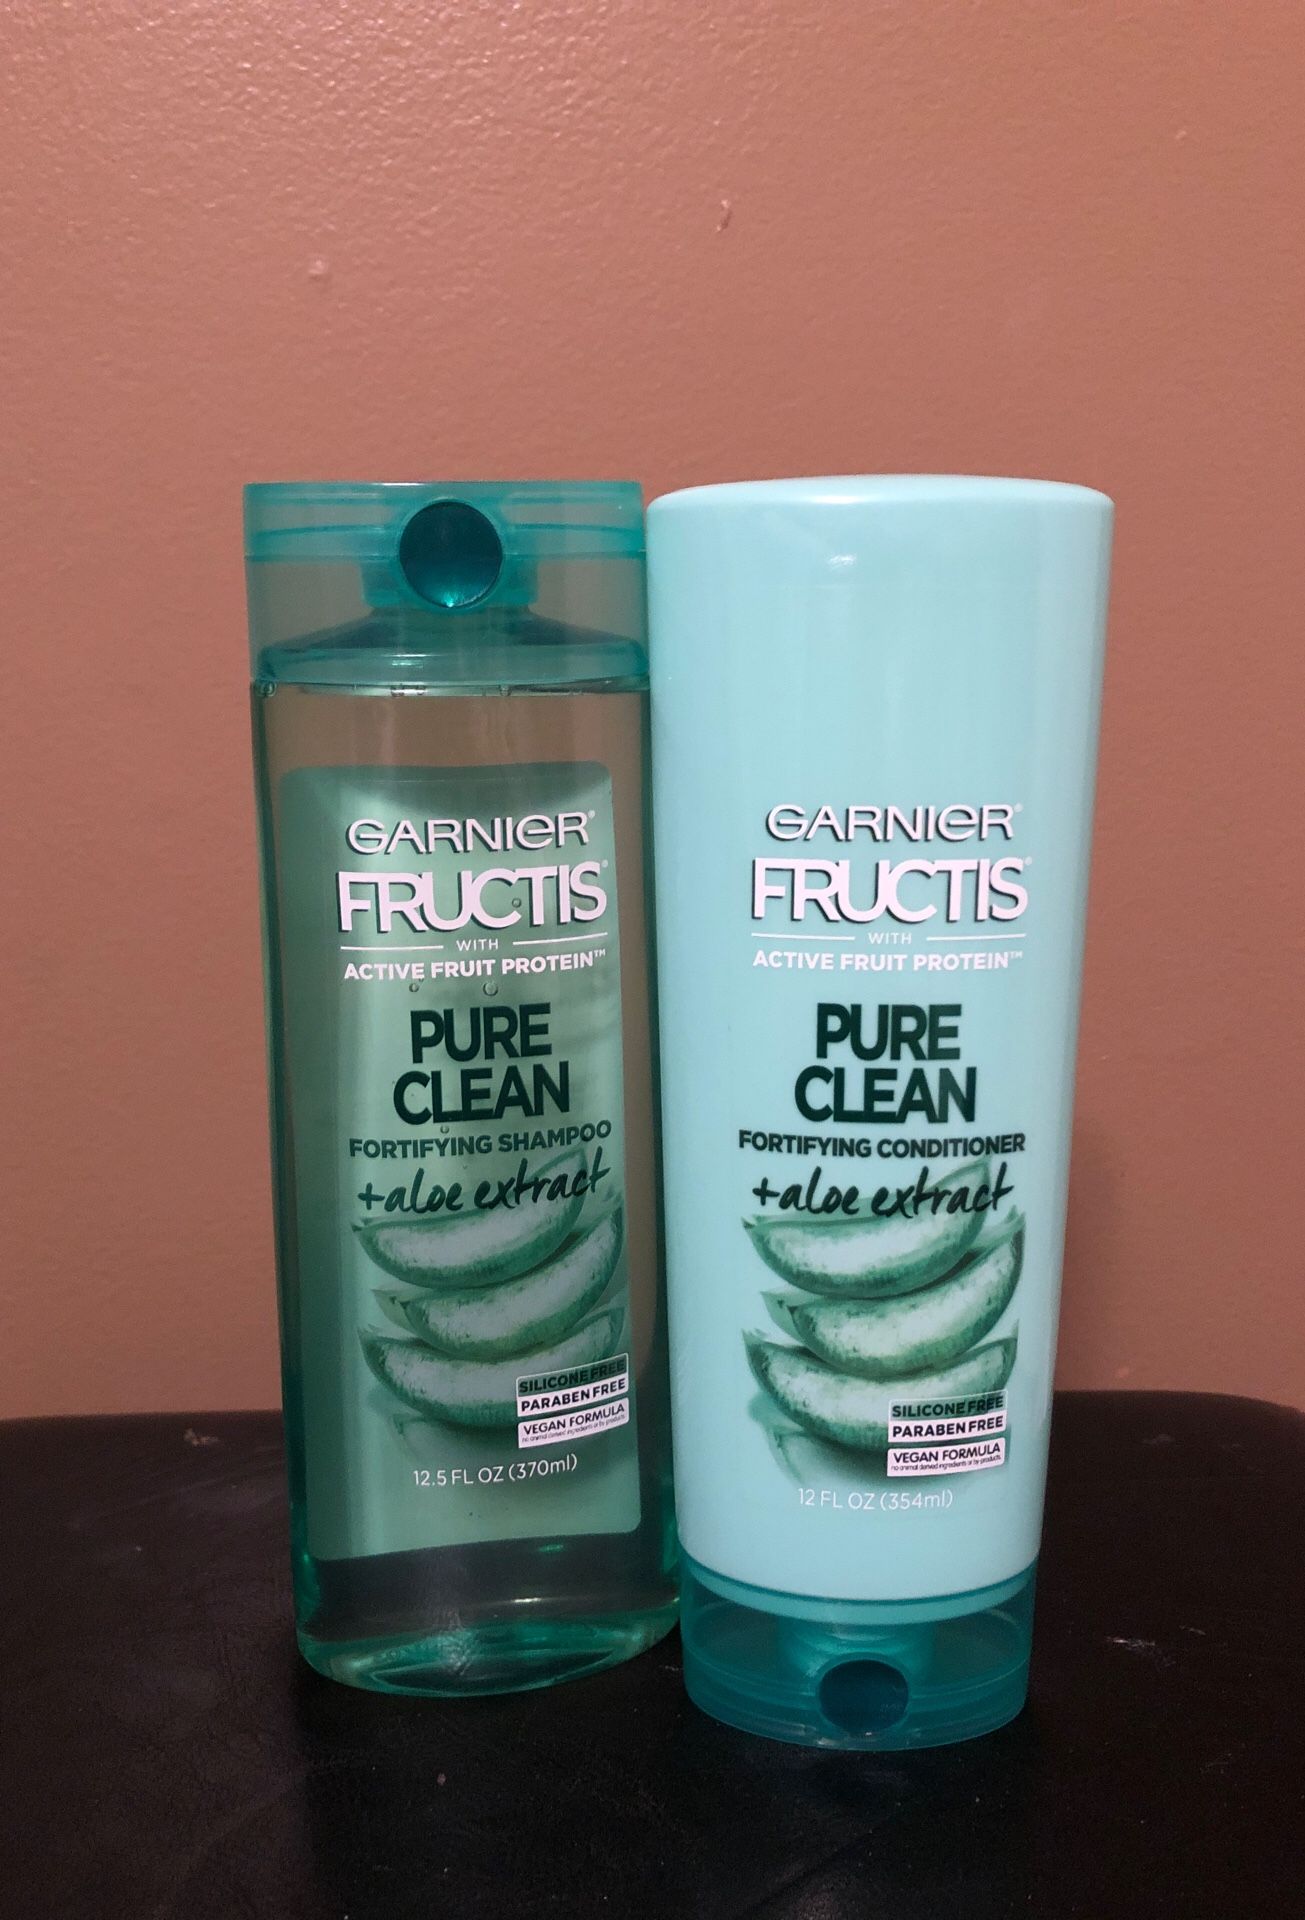 Garnier Fructis shampoo and conditioner